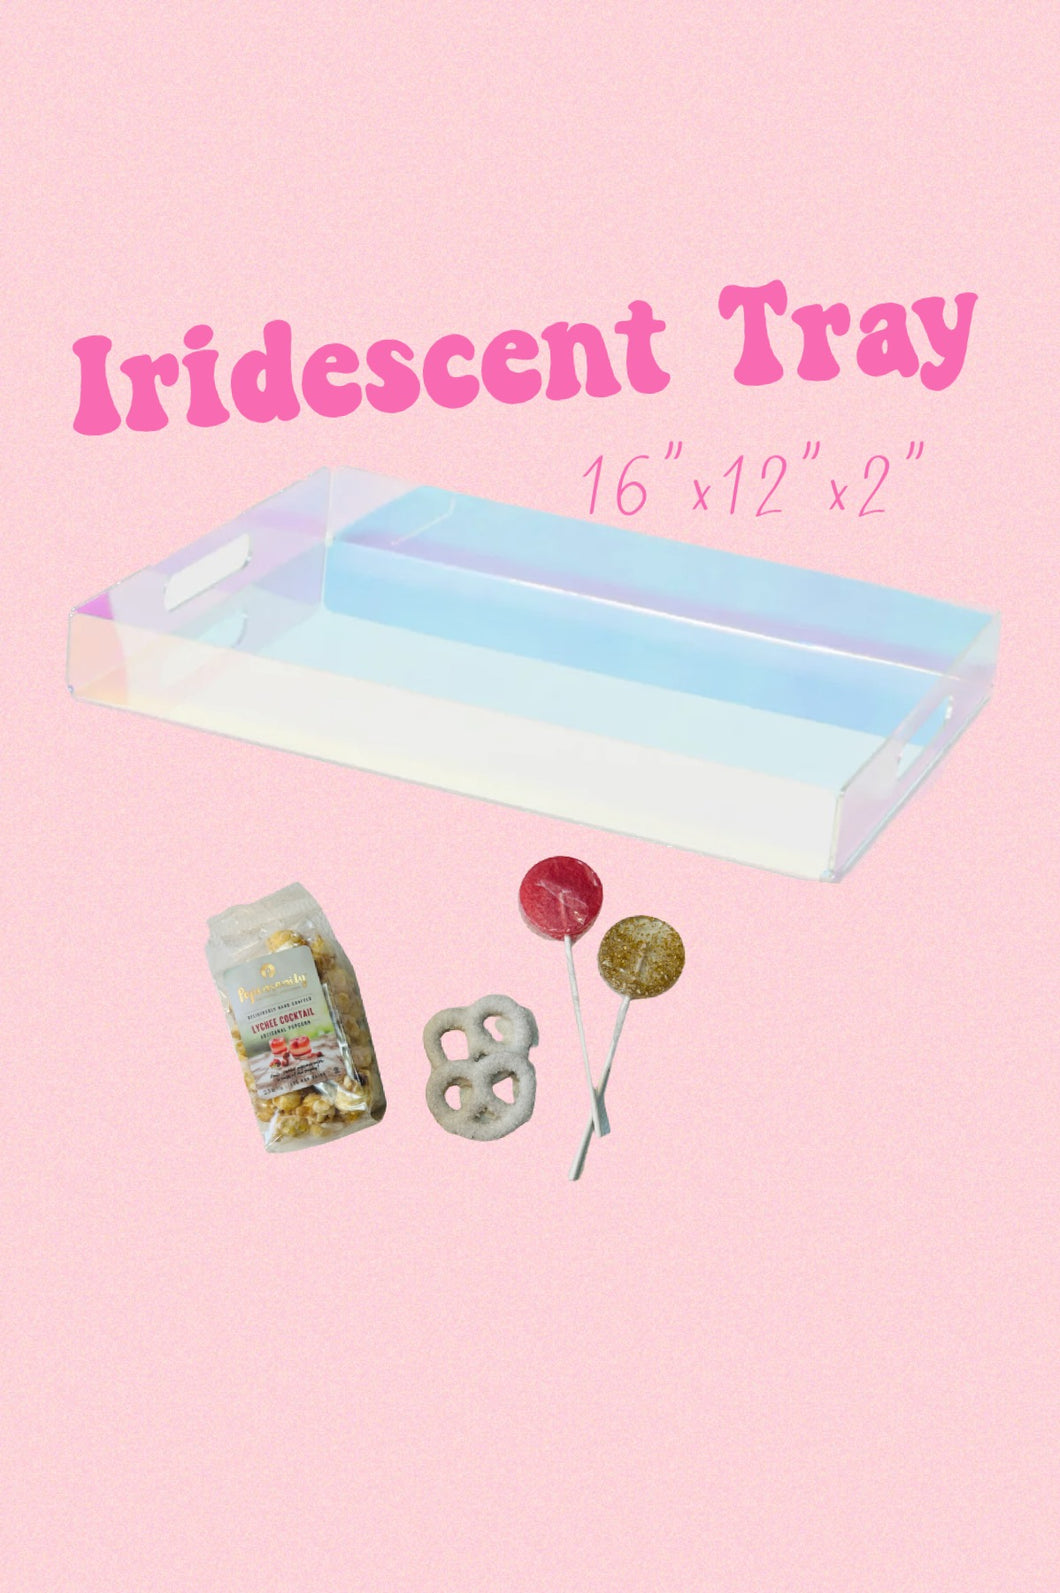 Iridescent Tray